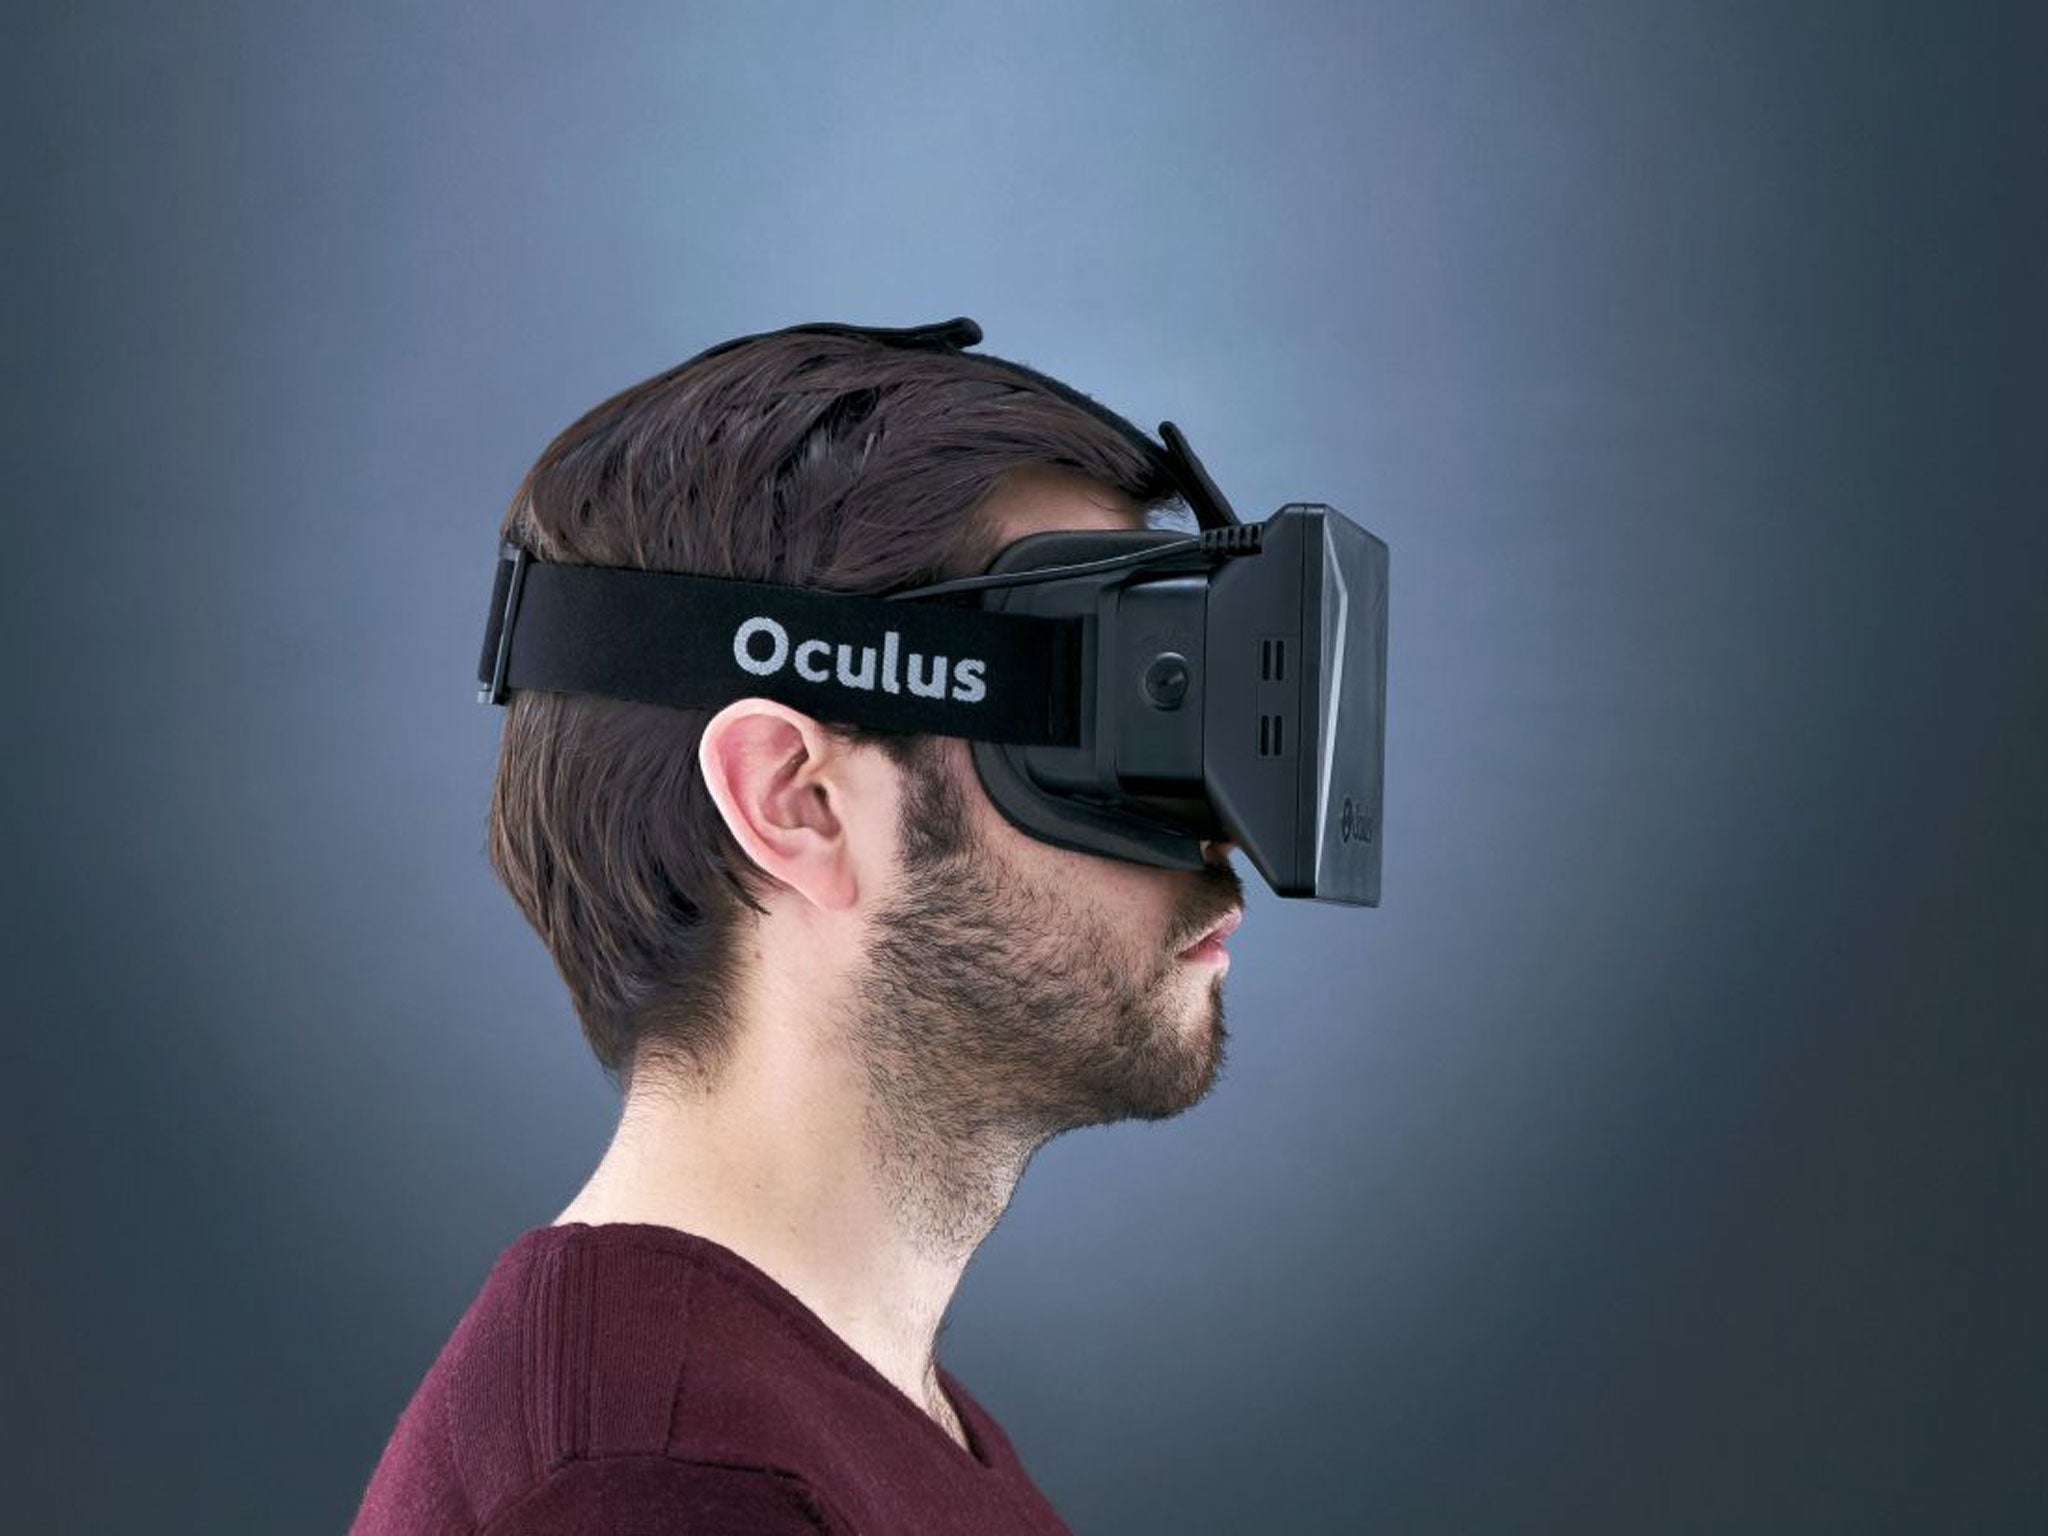 Vr последняя версия. Шлем Oculus Rift. ВР очки Окулус. VR шлем Oculus. Очки виртуальной реальности Oculus Rift.